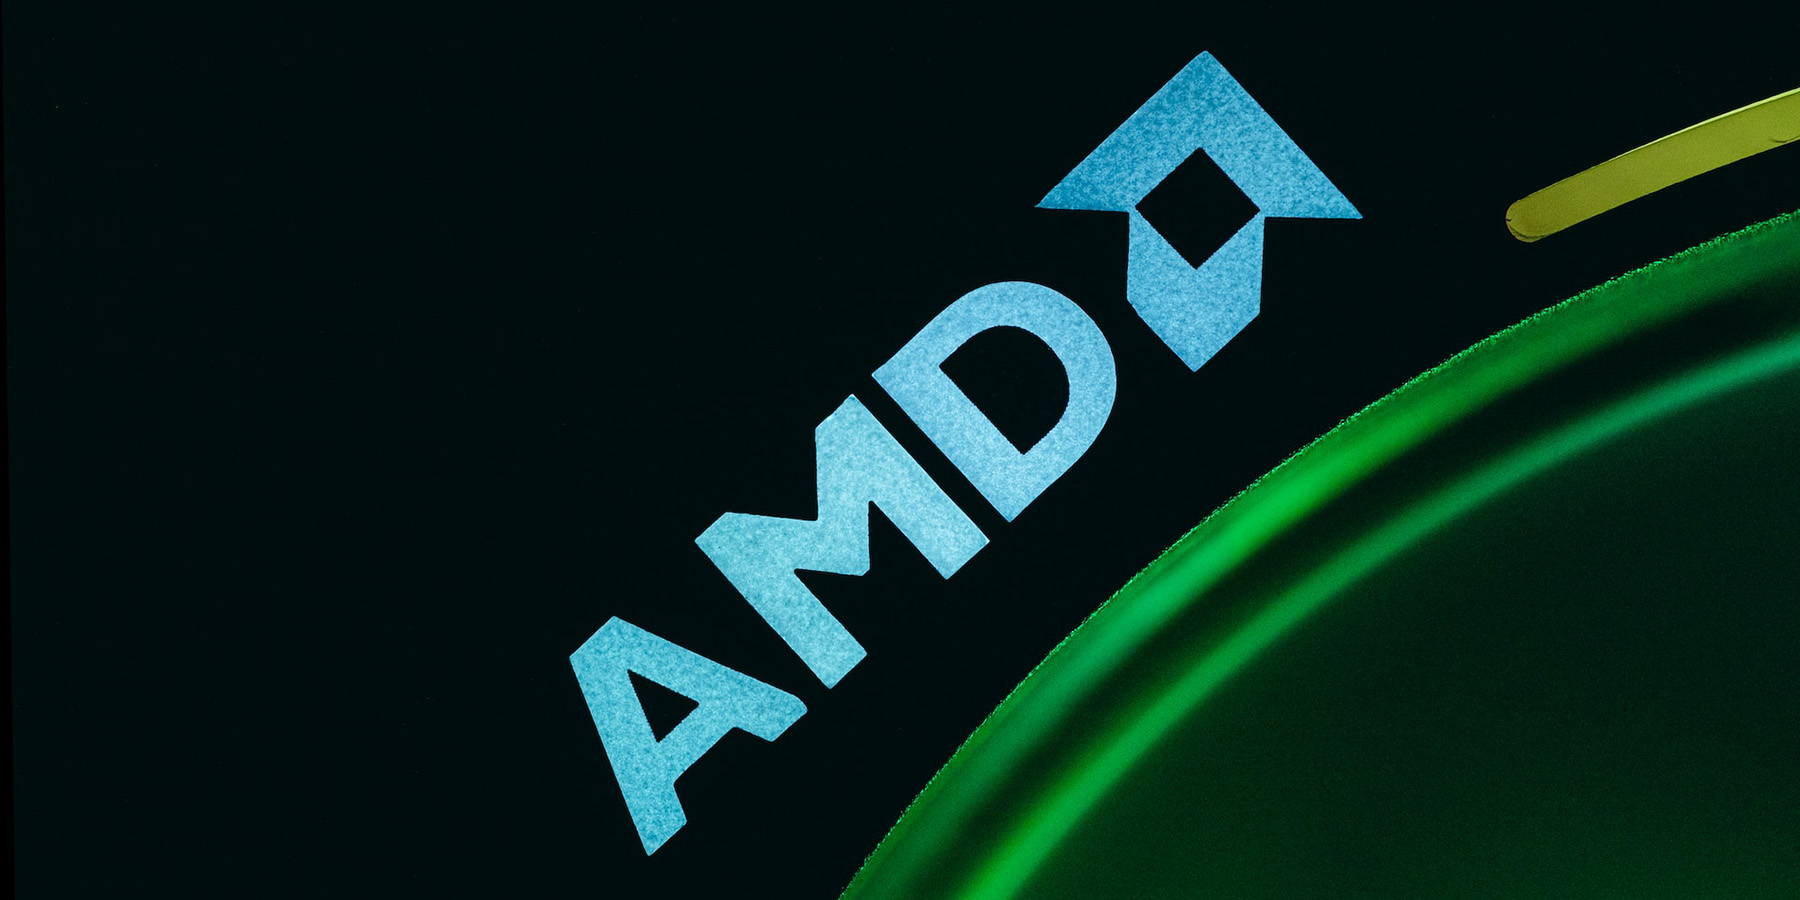 SWOT Analysis of AMD